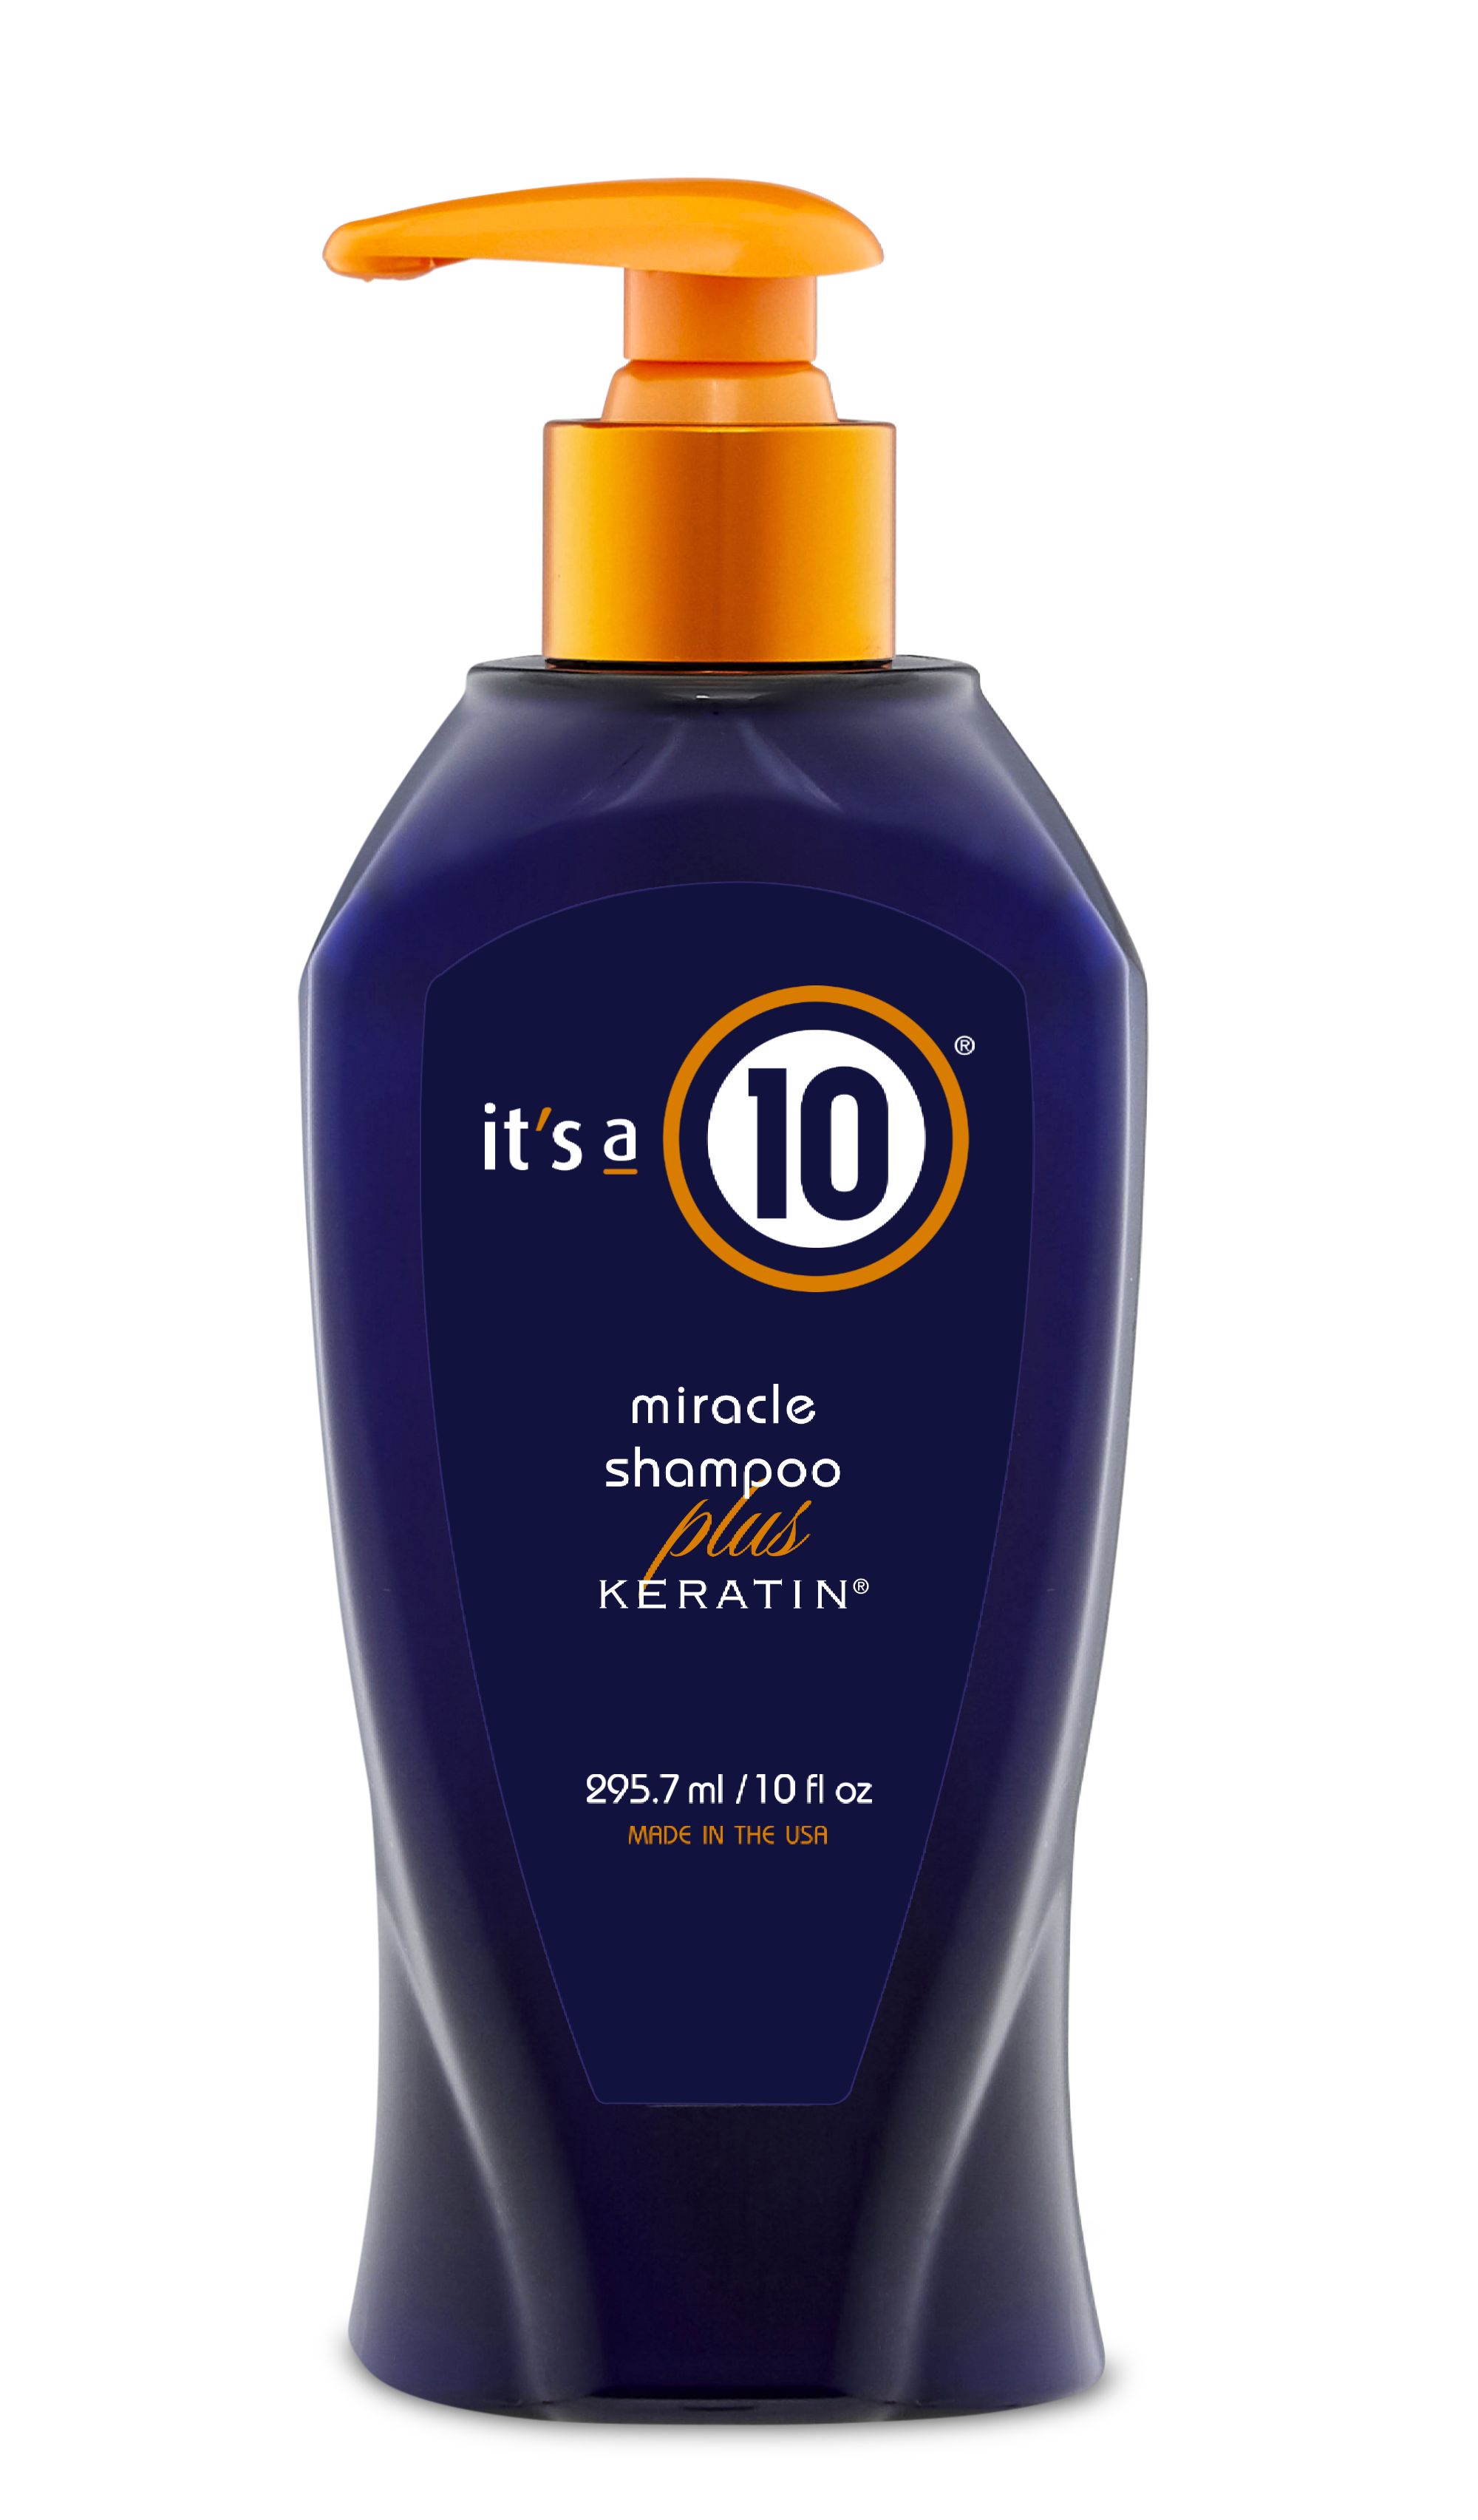 It's a 10 Miracle Shampoo plus Keratin